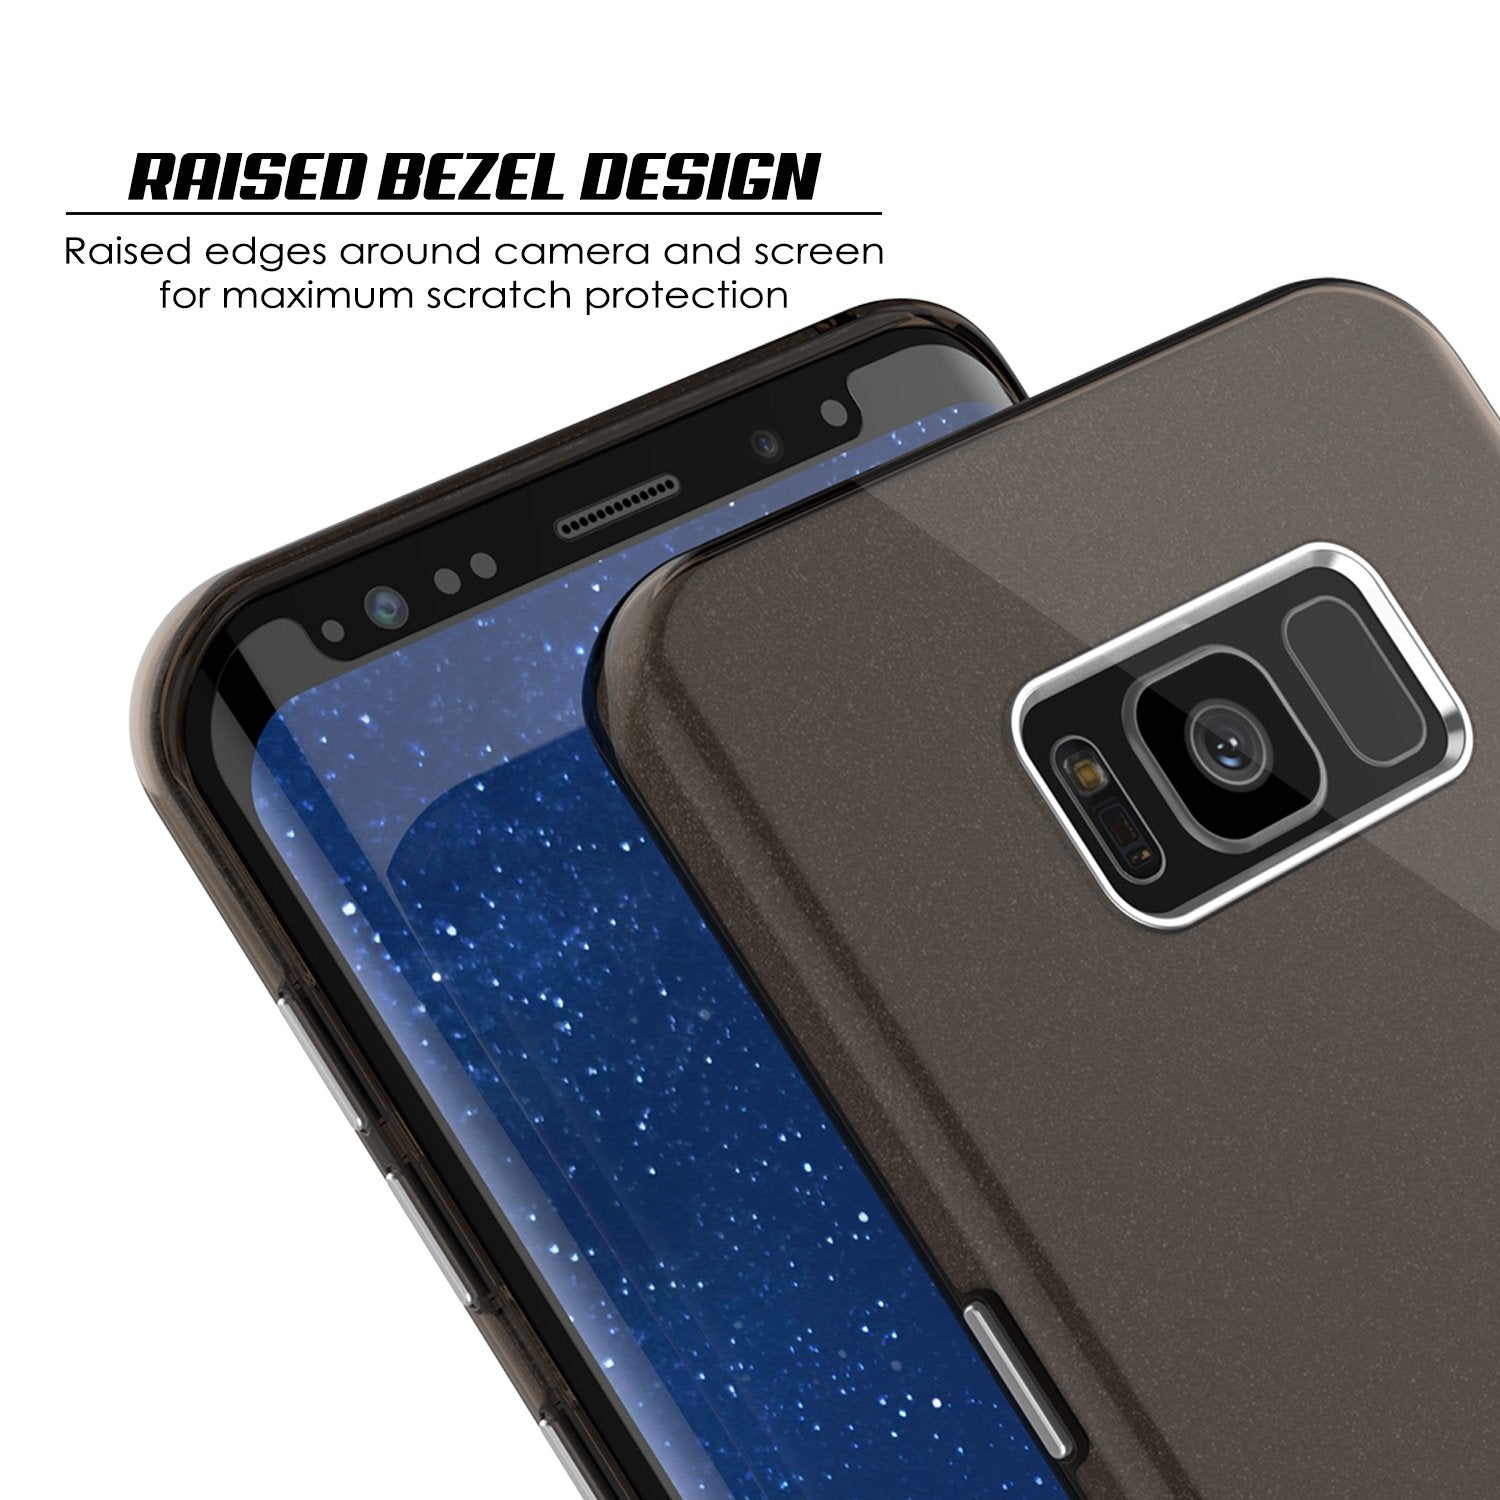 Galaxy S8 Plus Case, Punkcase Galactic 2.0 Series Ultra Slim Protective Armor TPU Cover [Black] - PunkCase NZ